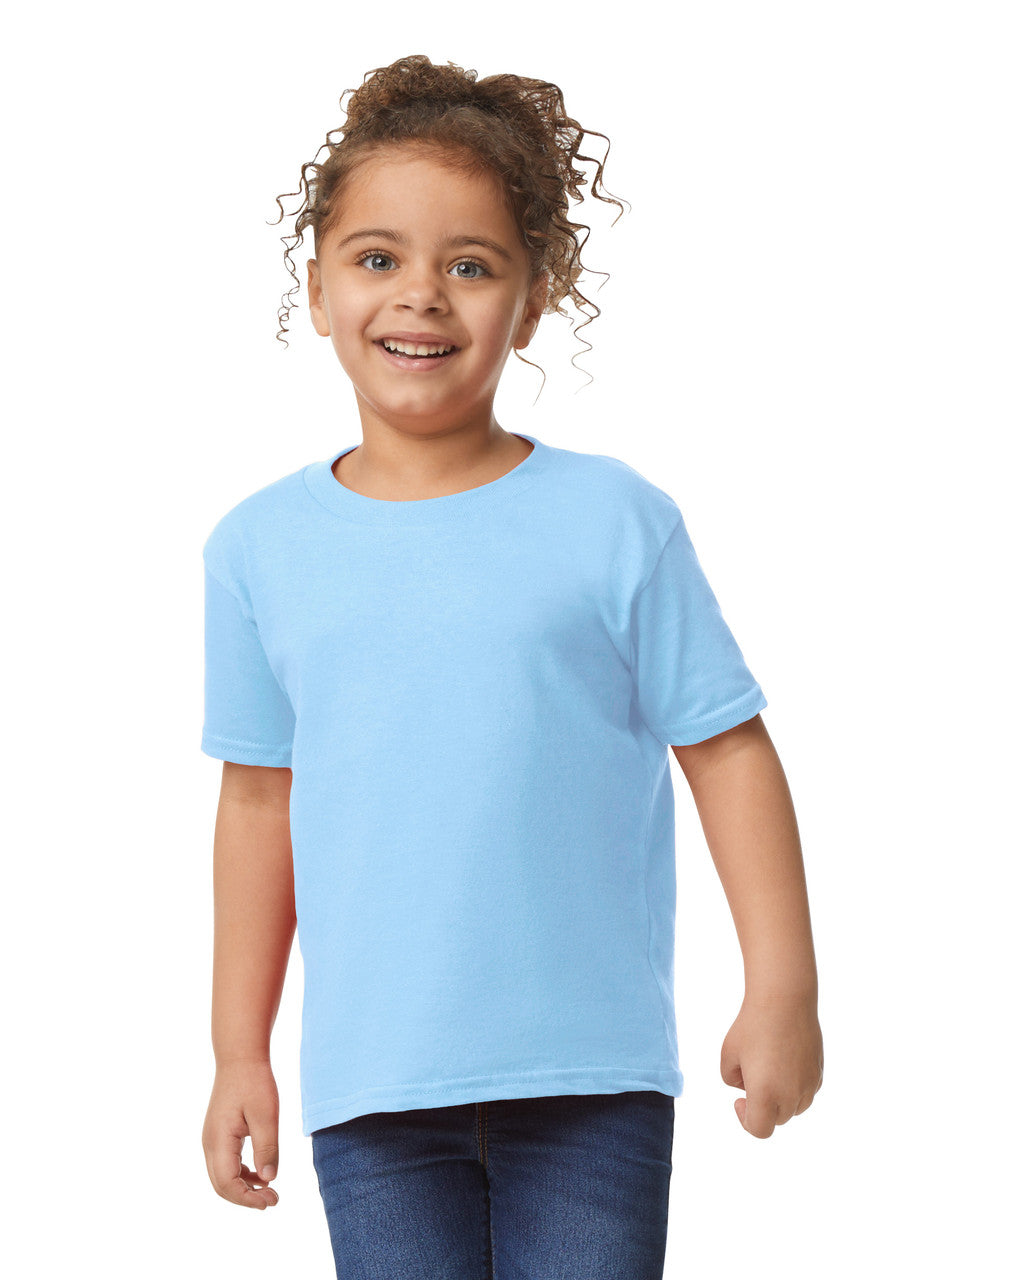 Toddlers Tshirt - Light Blue